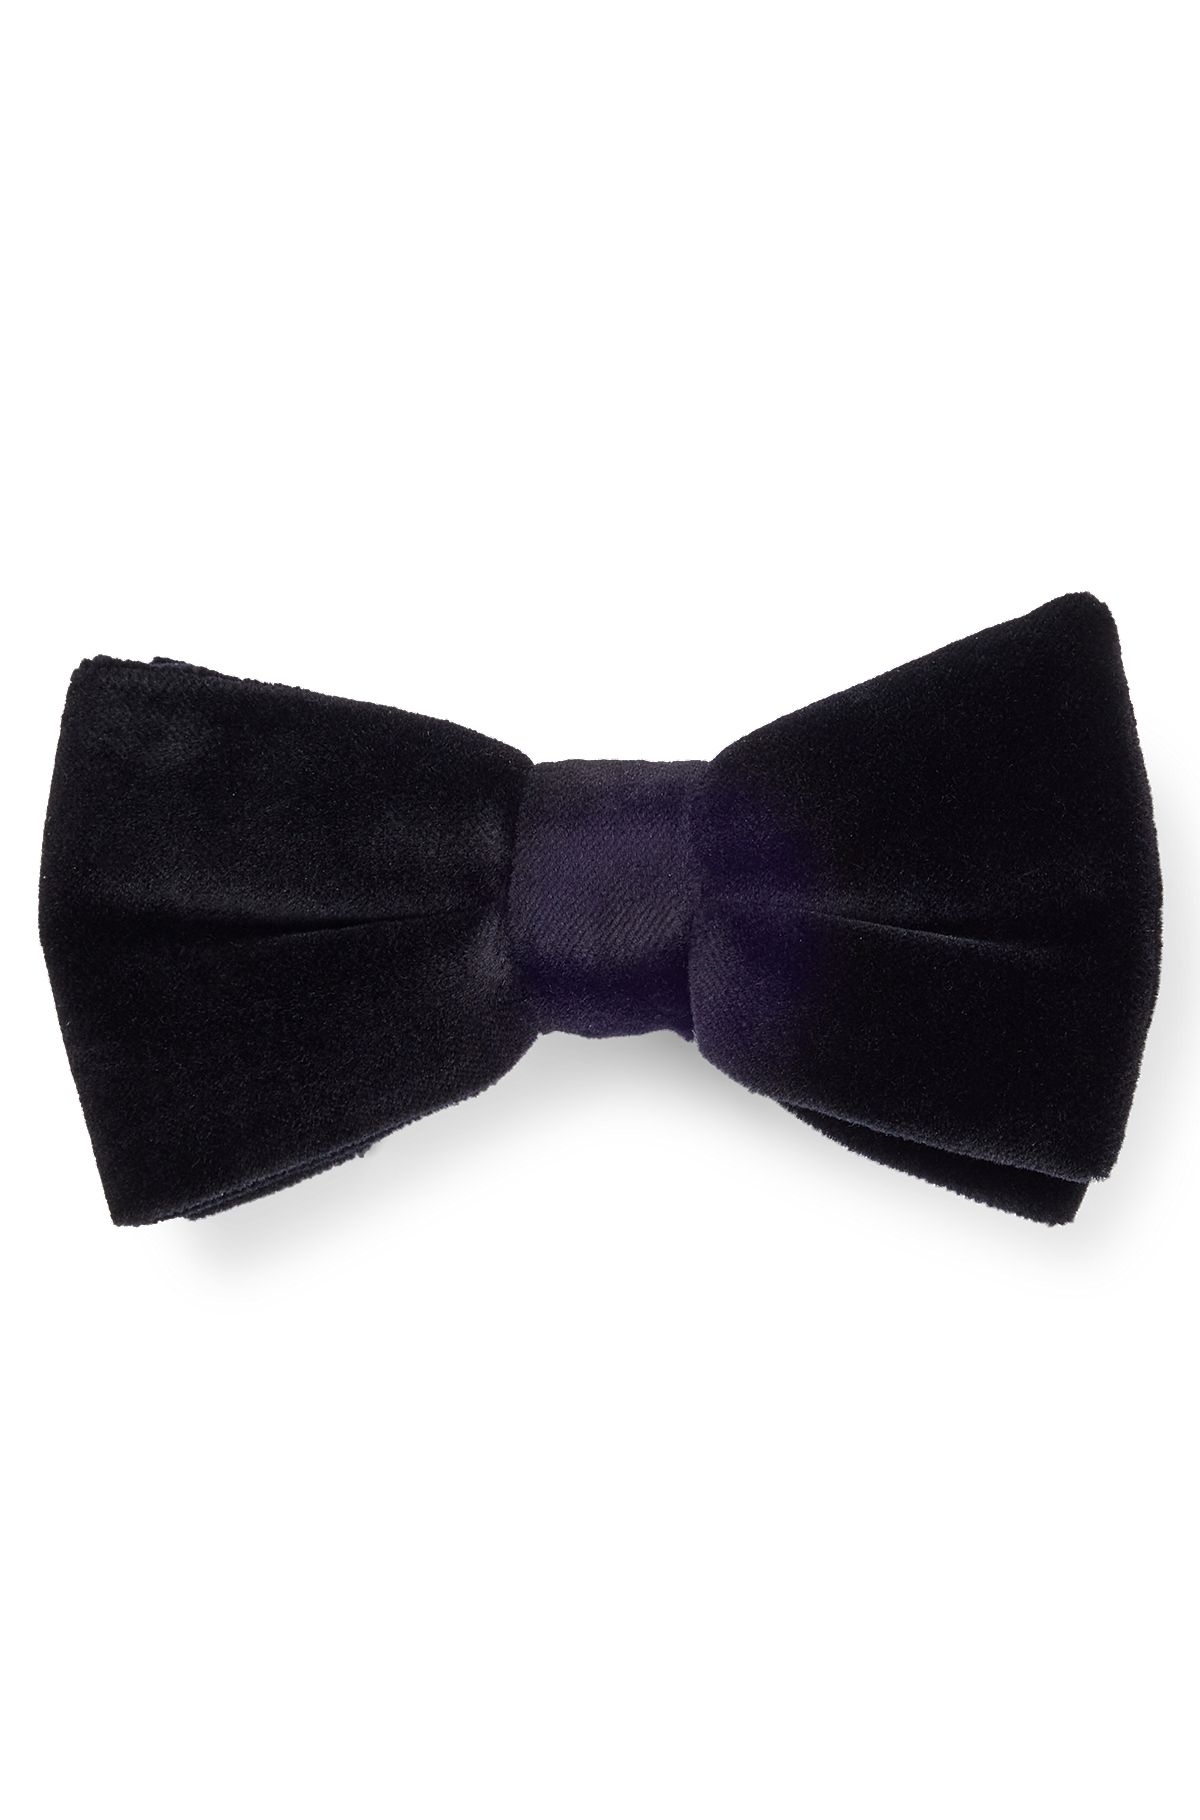 Bow tie in cotton velvet, Black